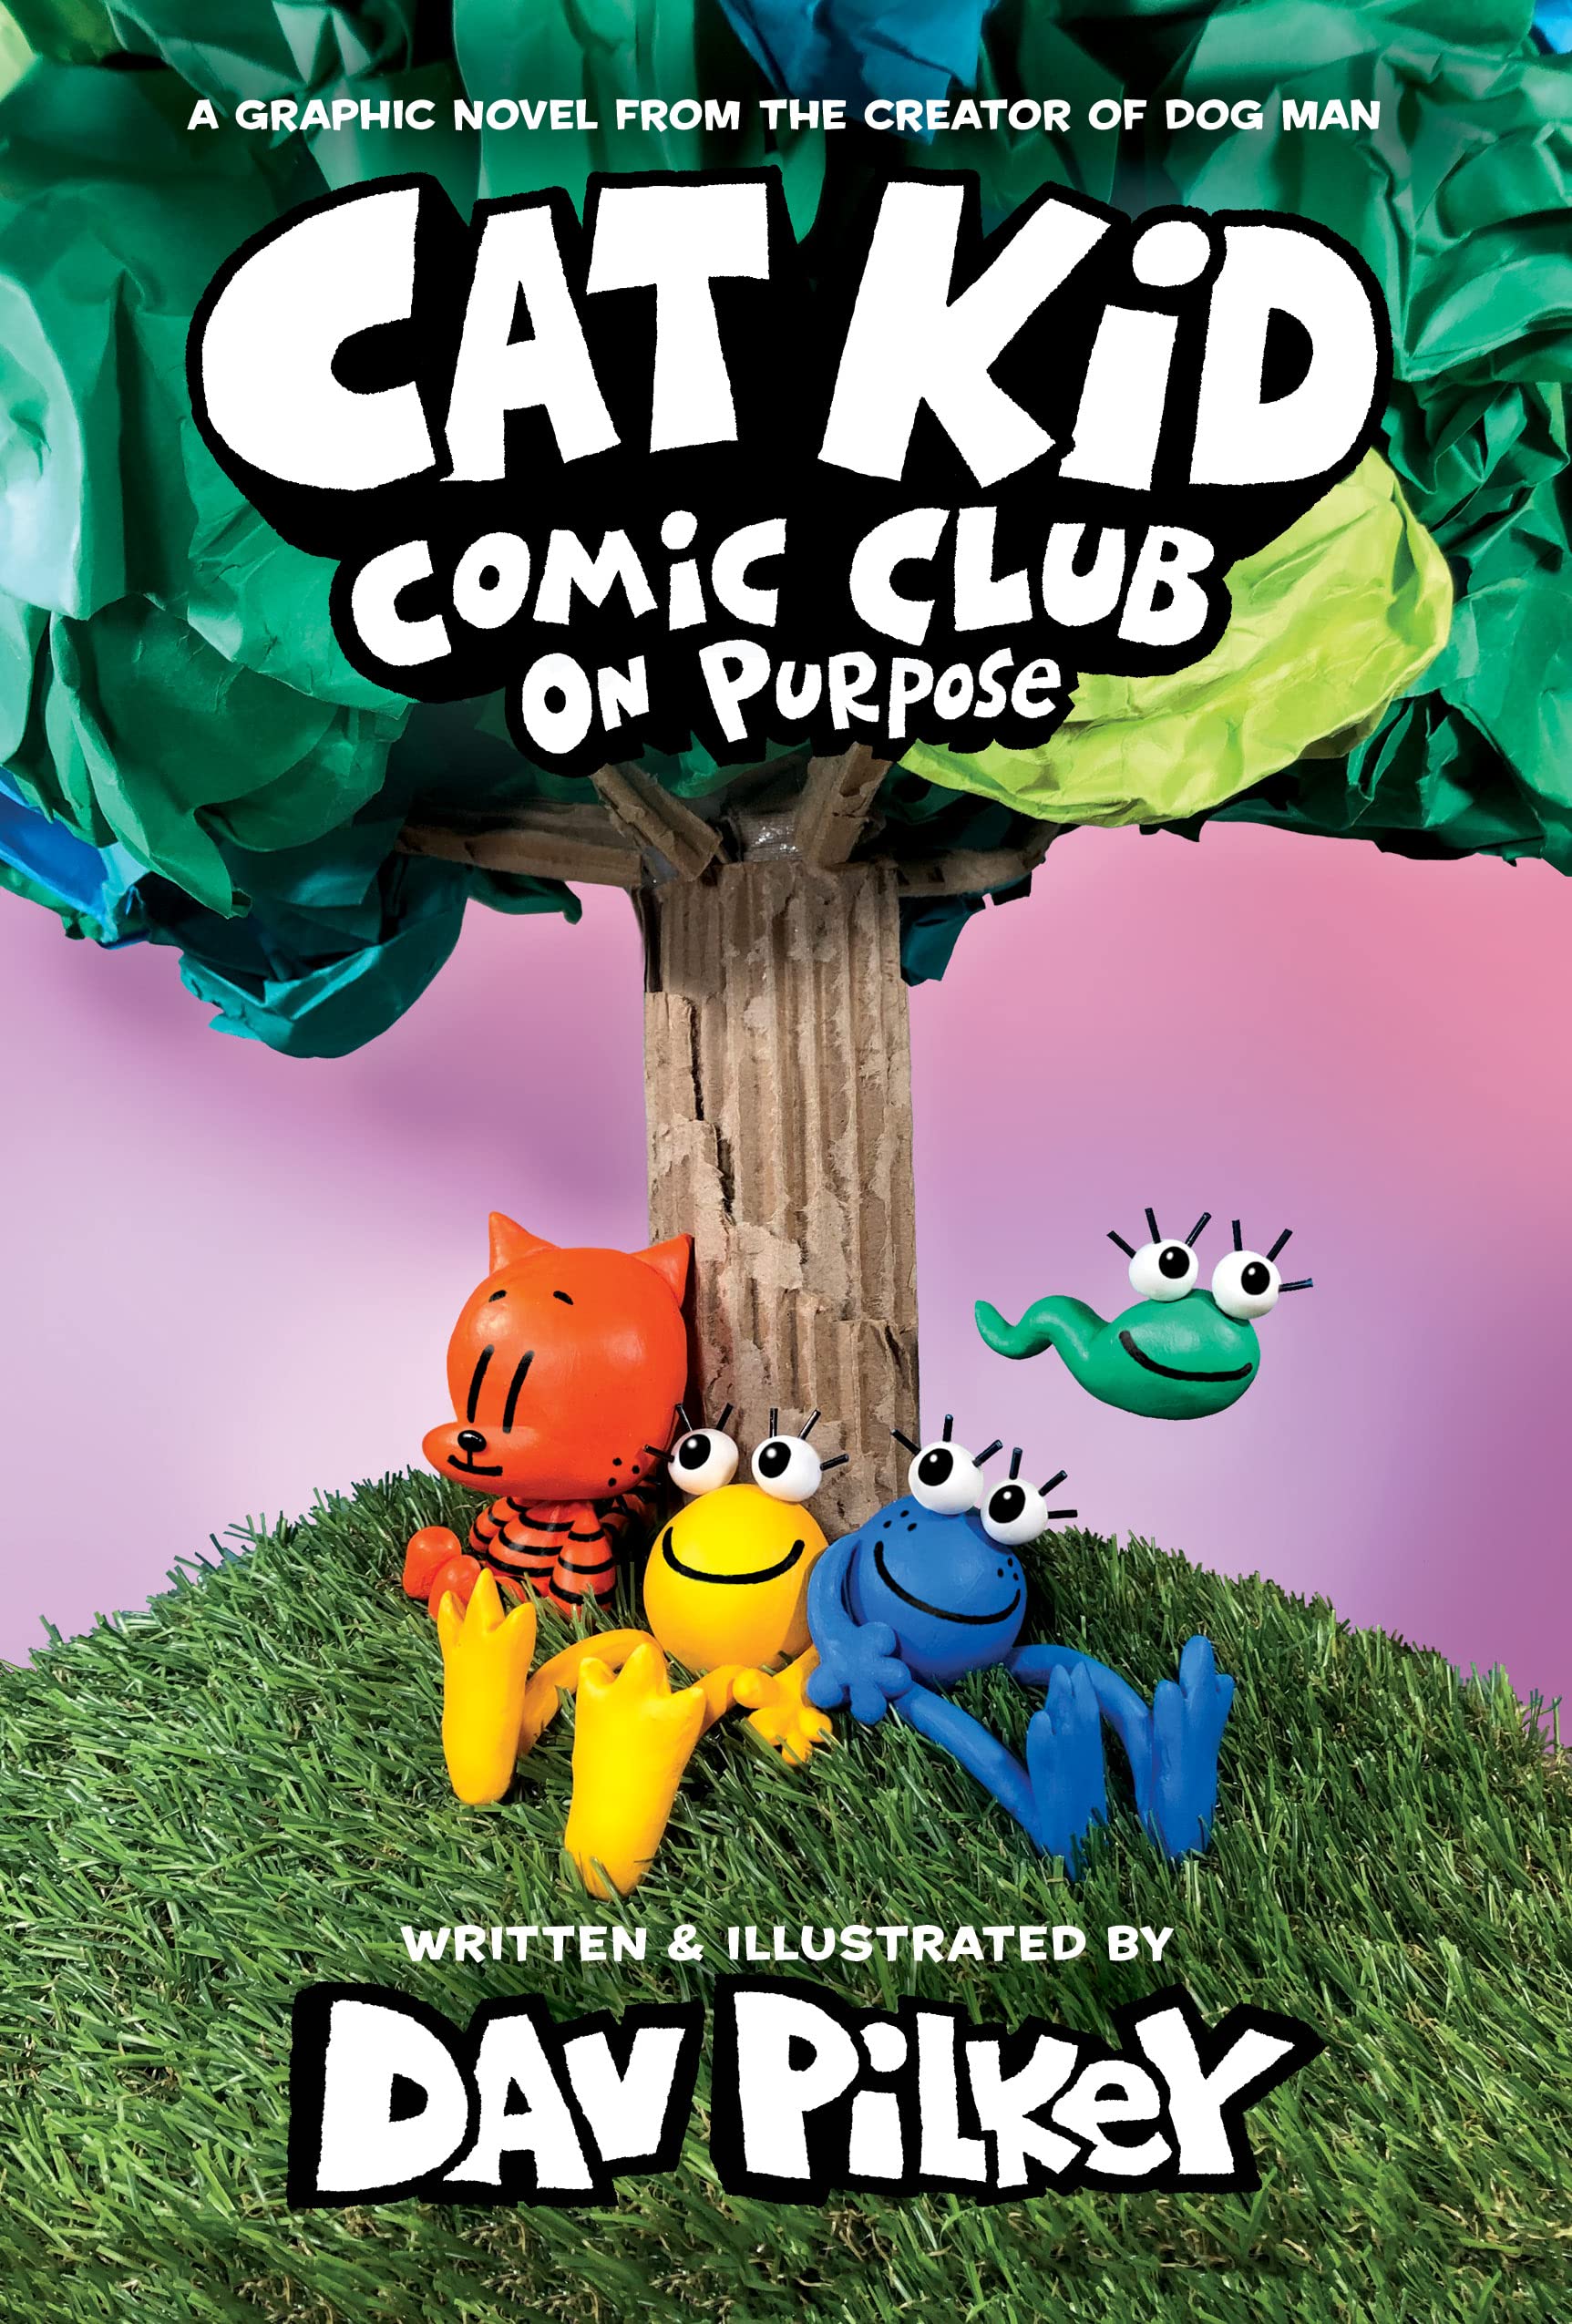 Cat kid comic club. 1, on purpose